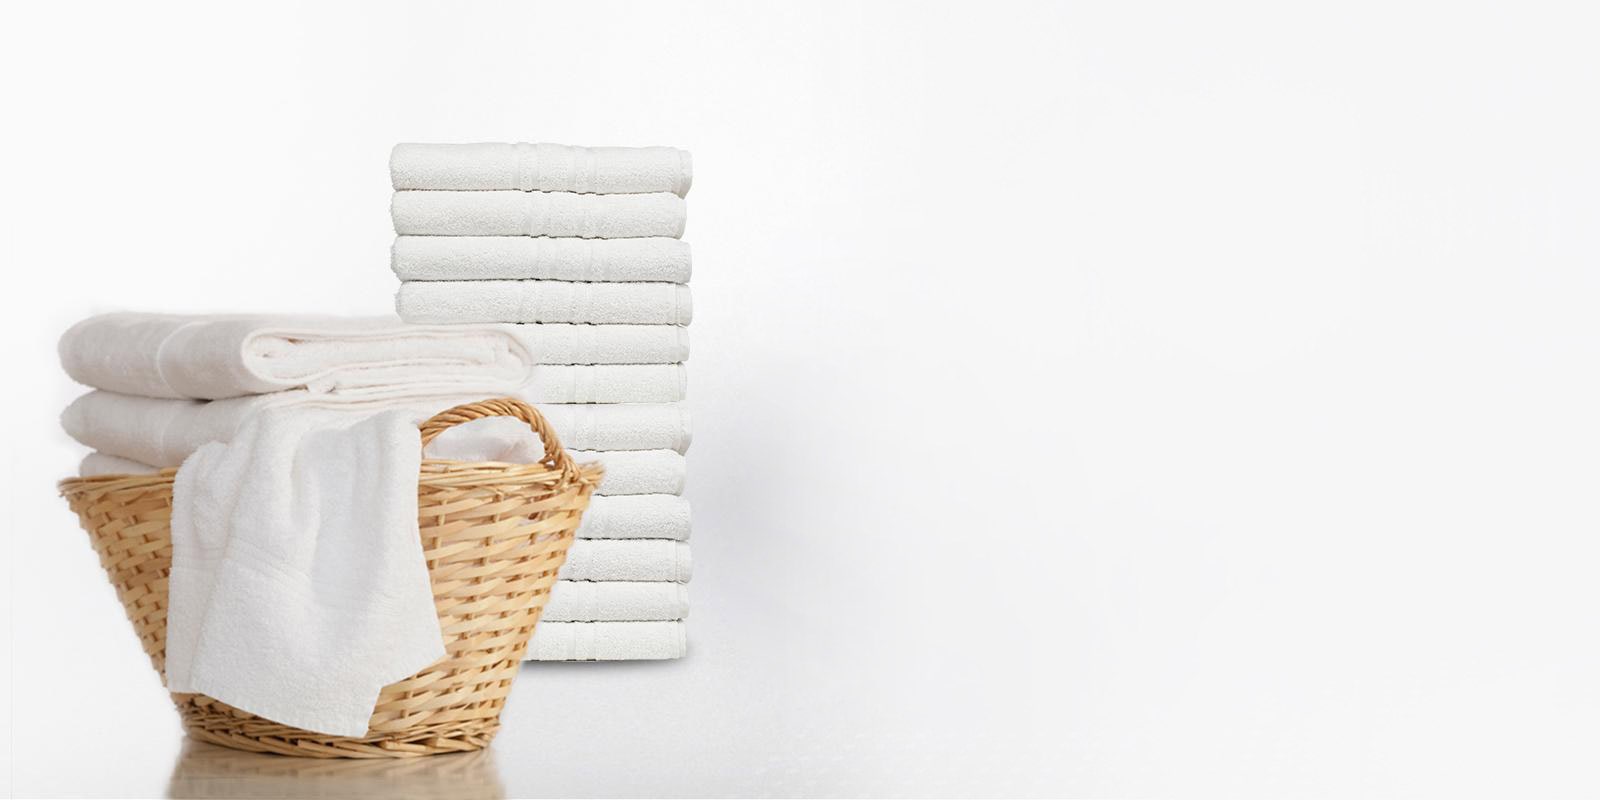 Folded laundered towels showcasing capacity